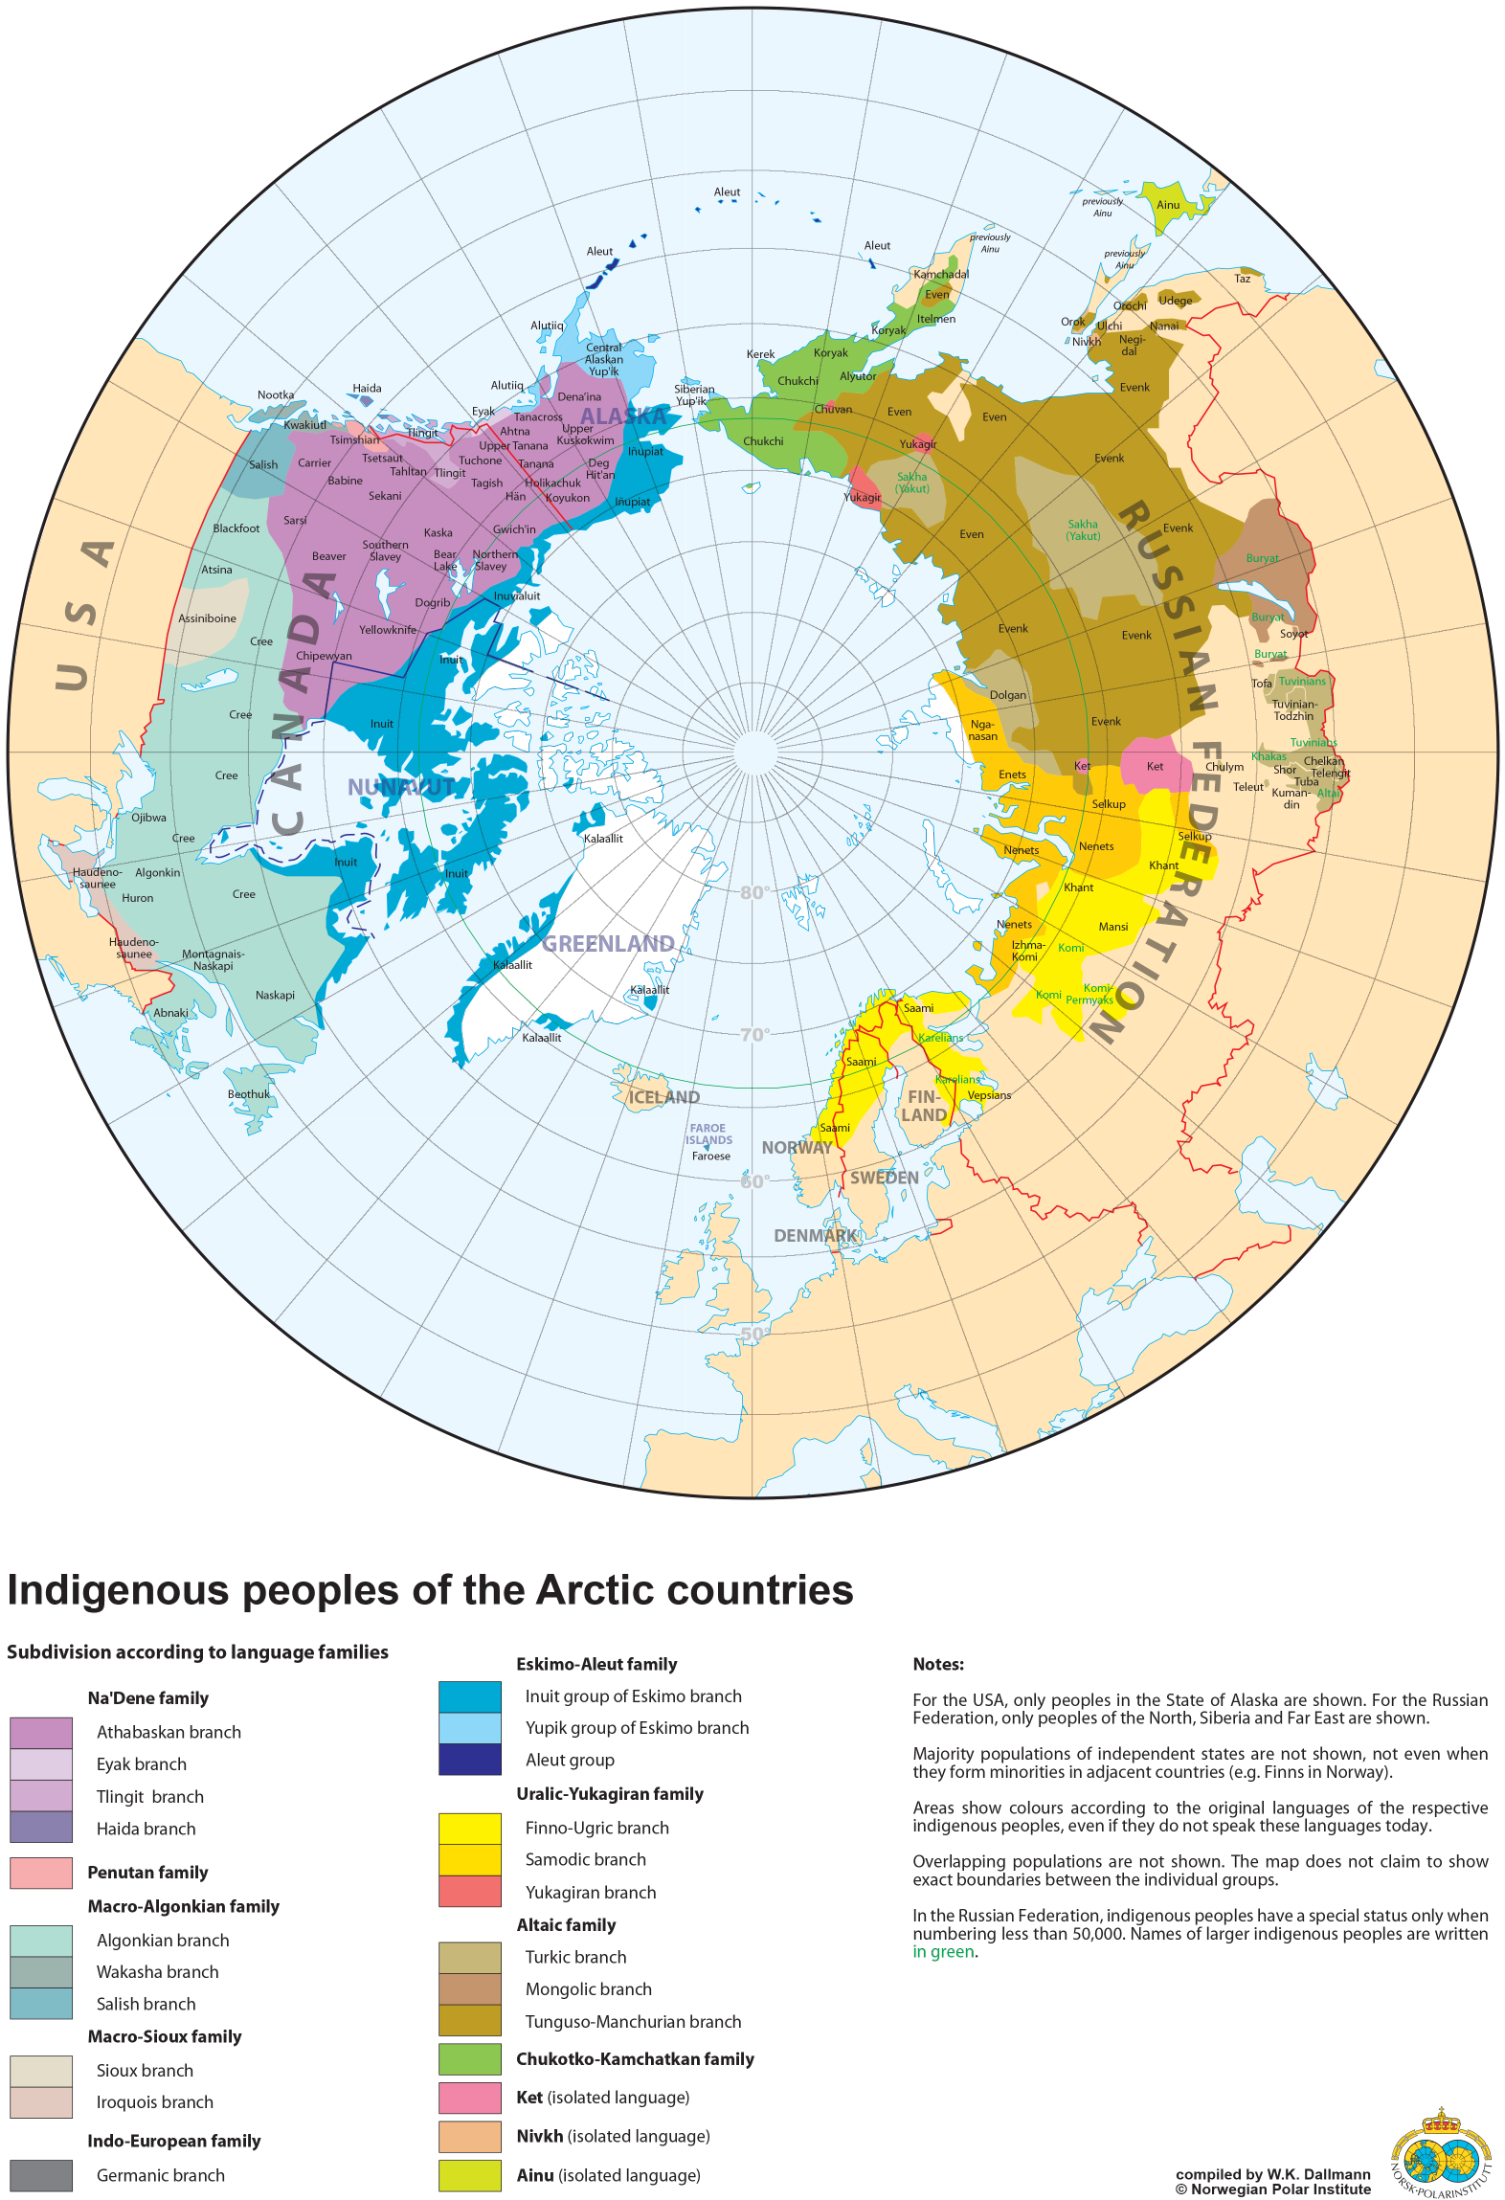 Arctic indigenous peoples